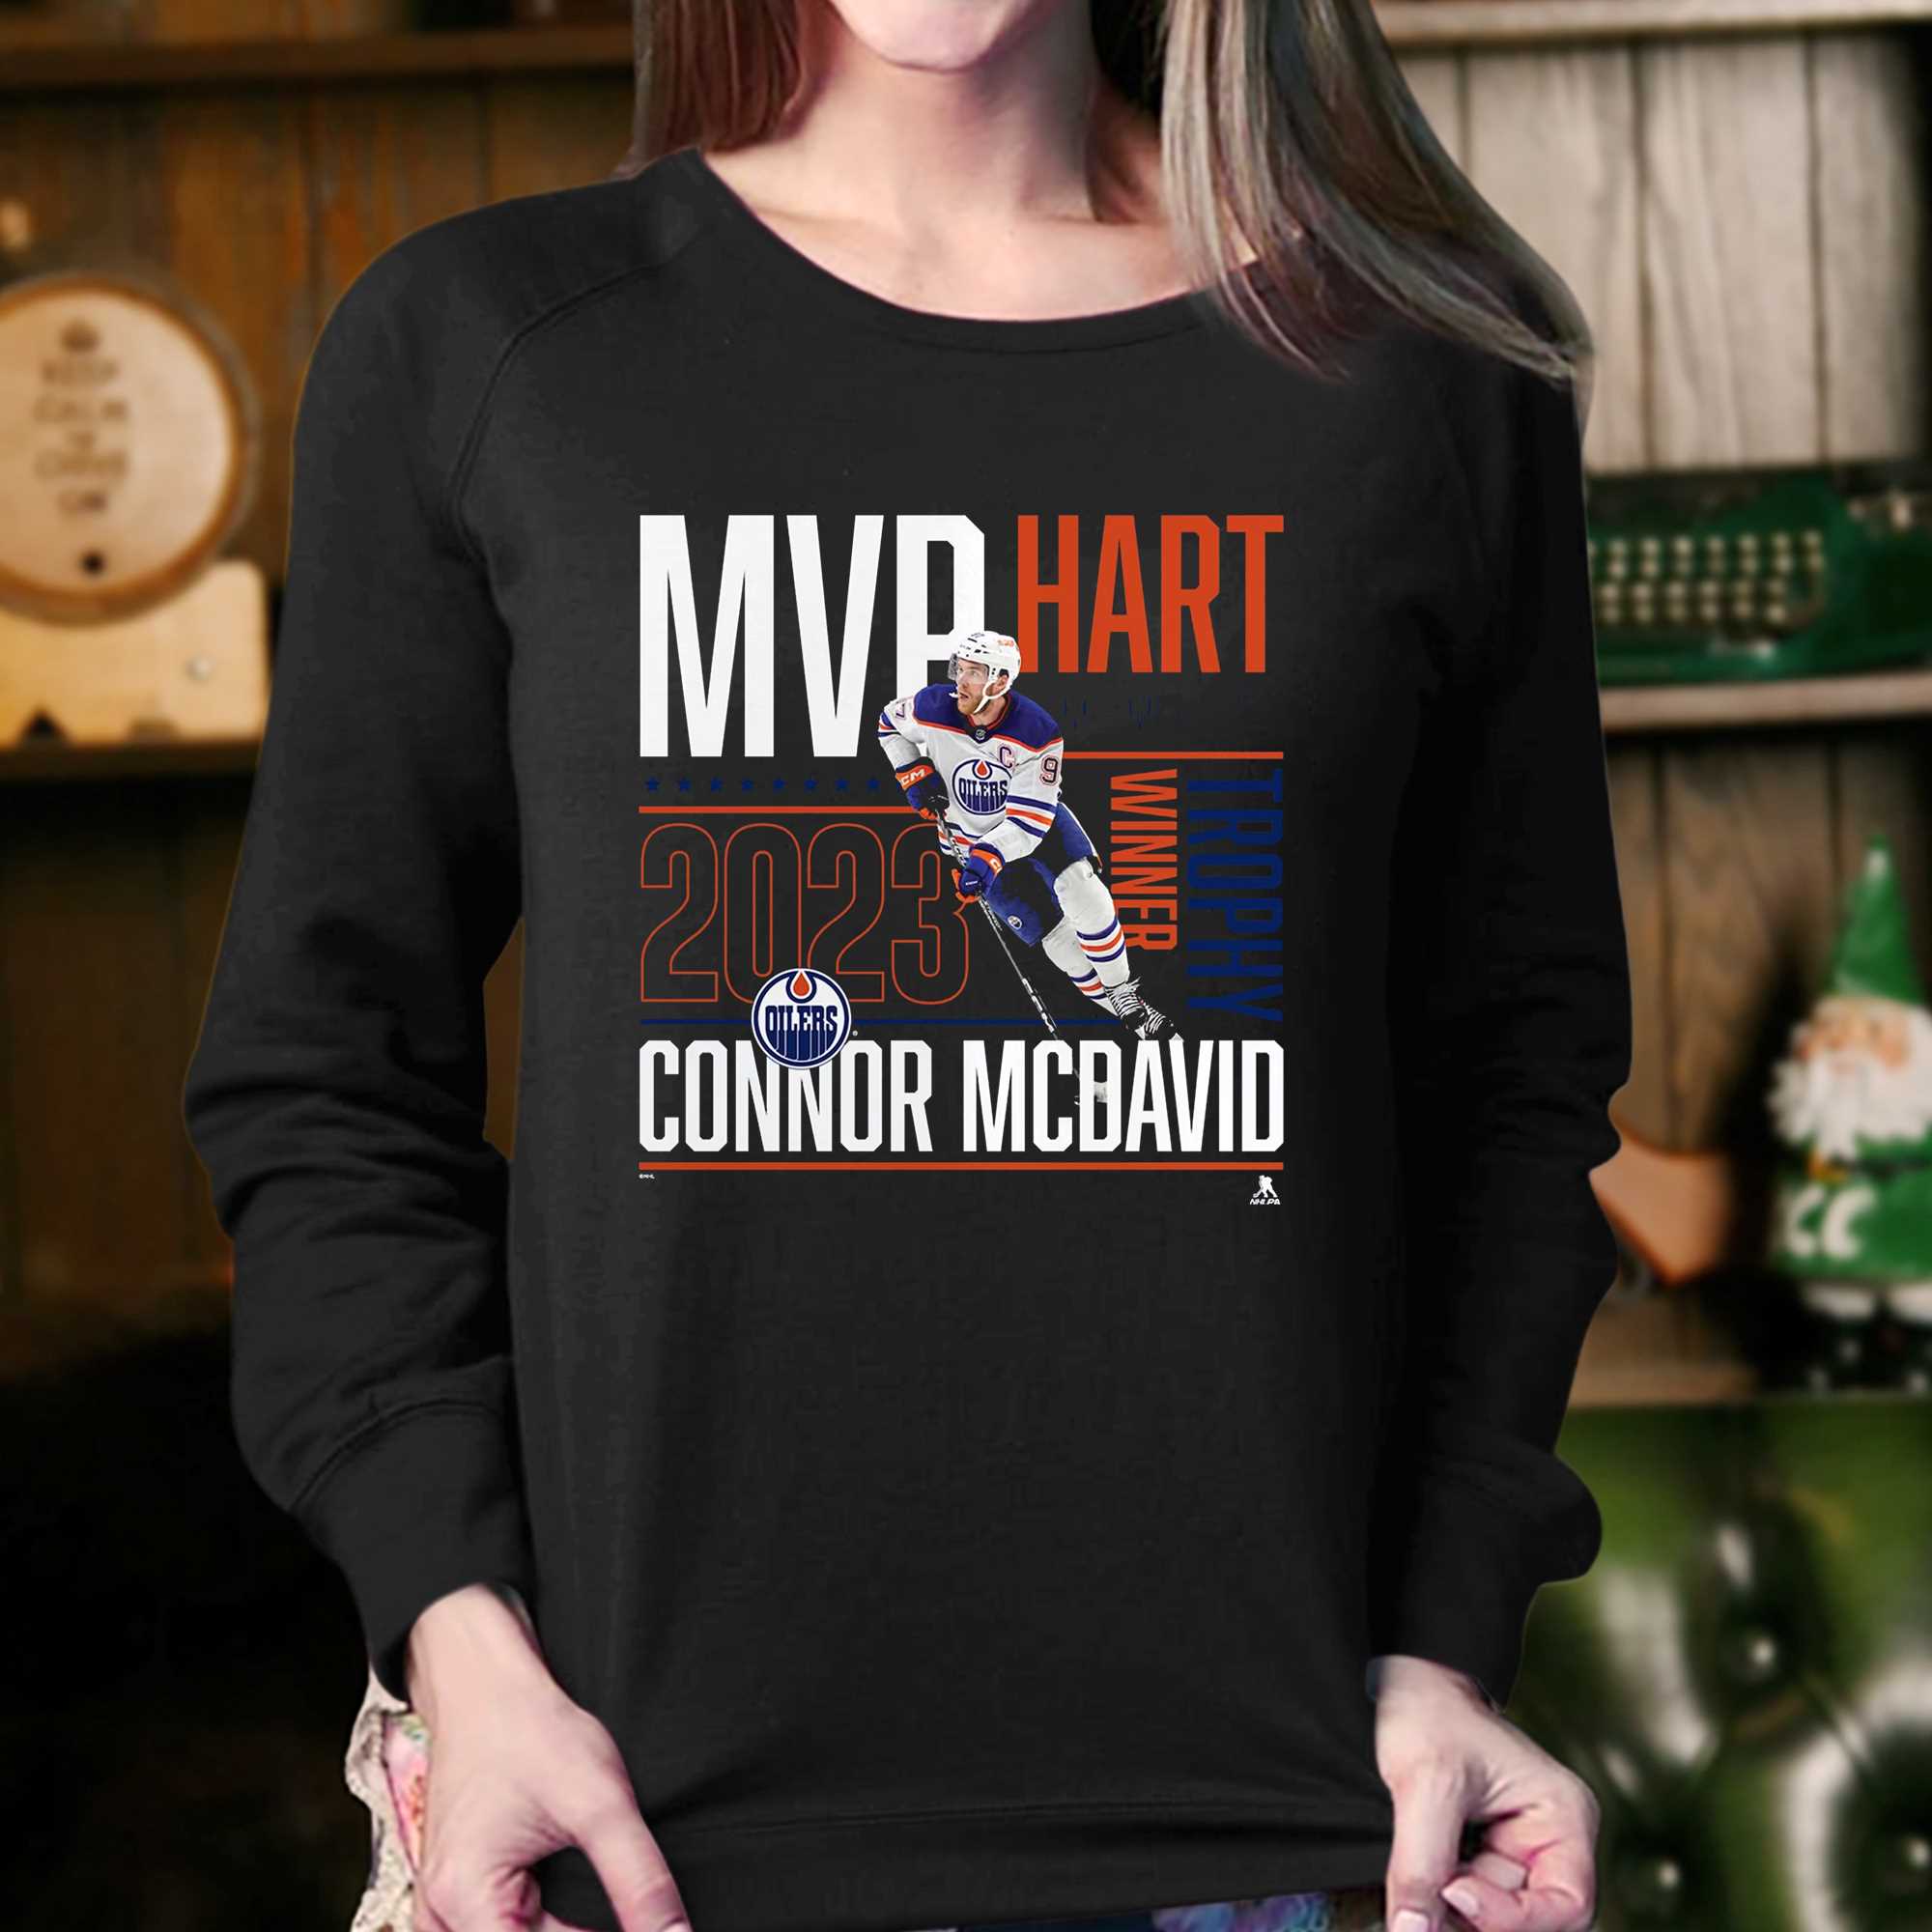 Connor McDavid Jerseys, Connor McDavid T-Shirts, Gear